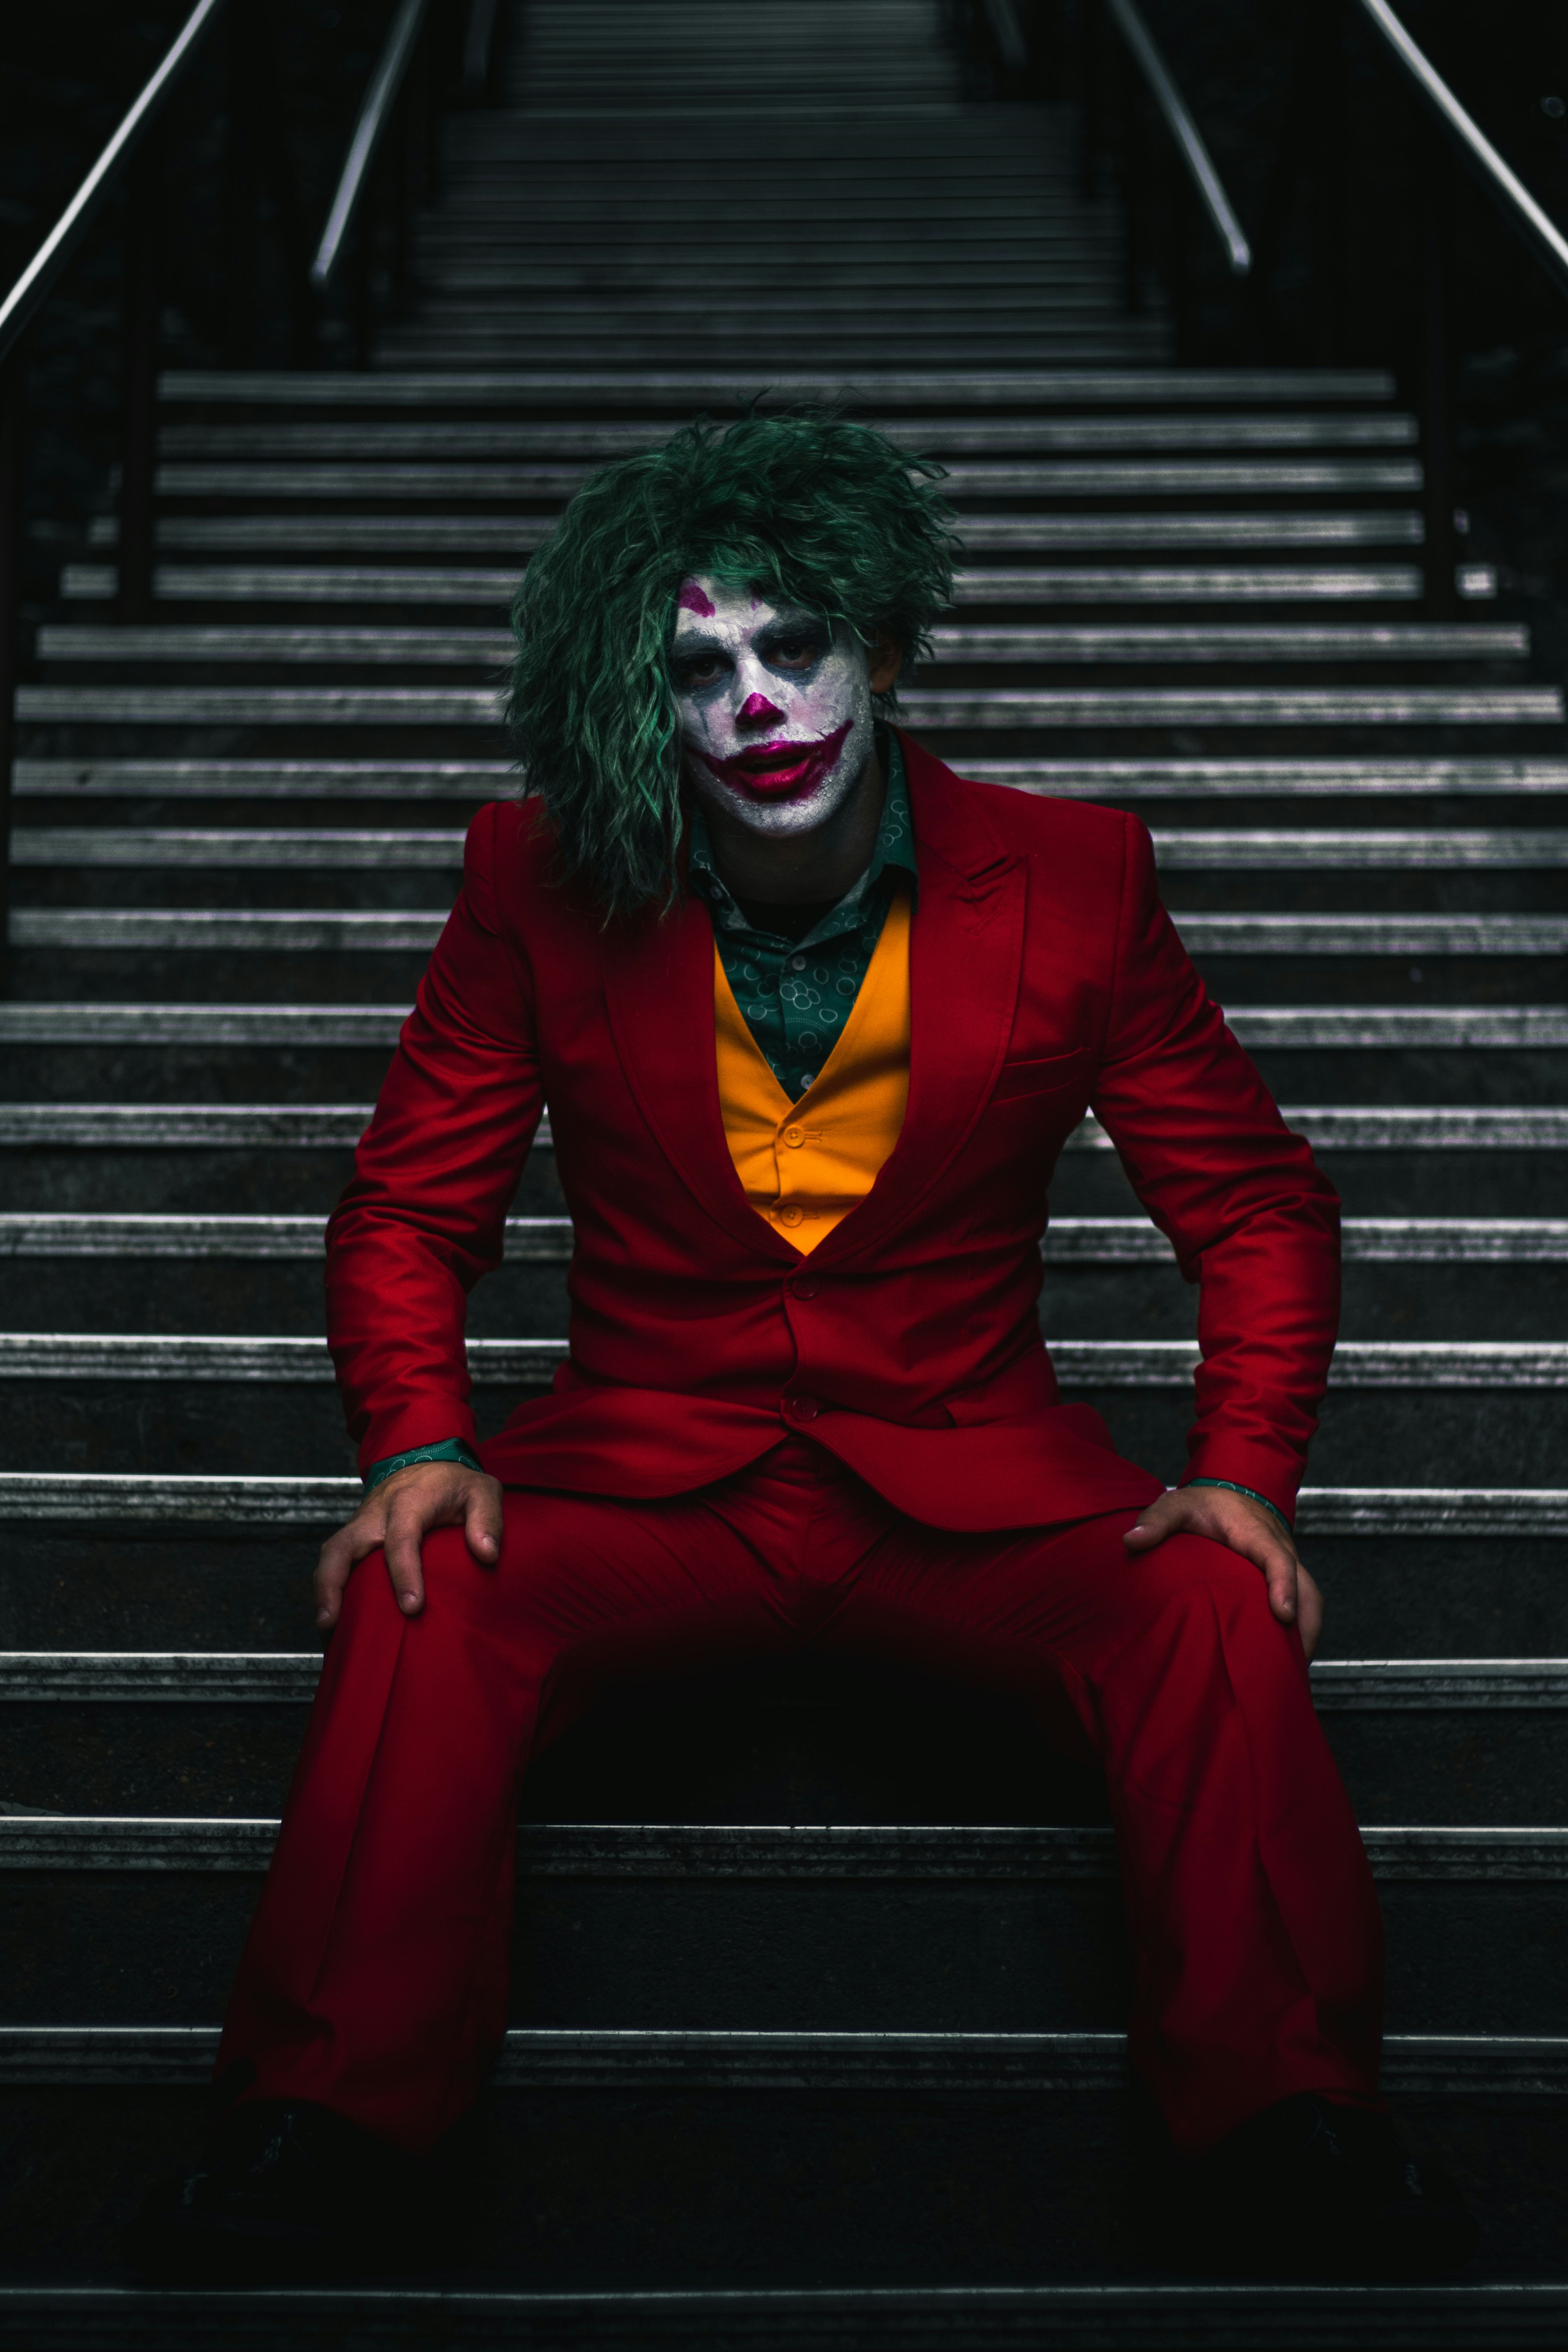 Joker sitting on stairs